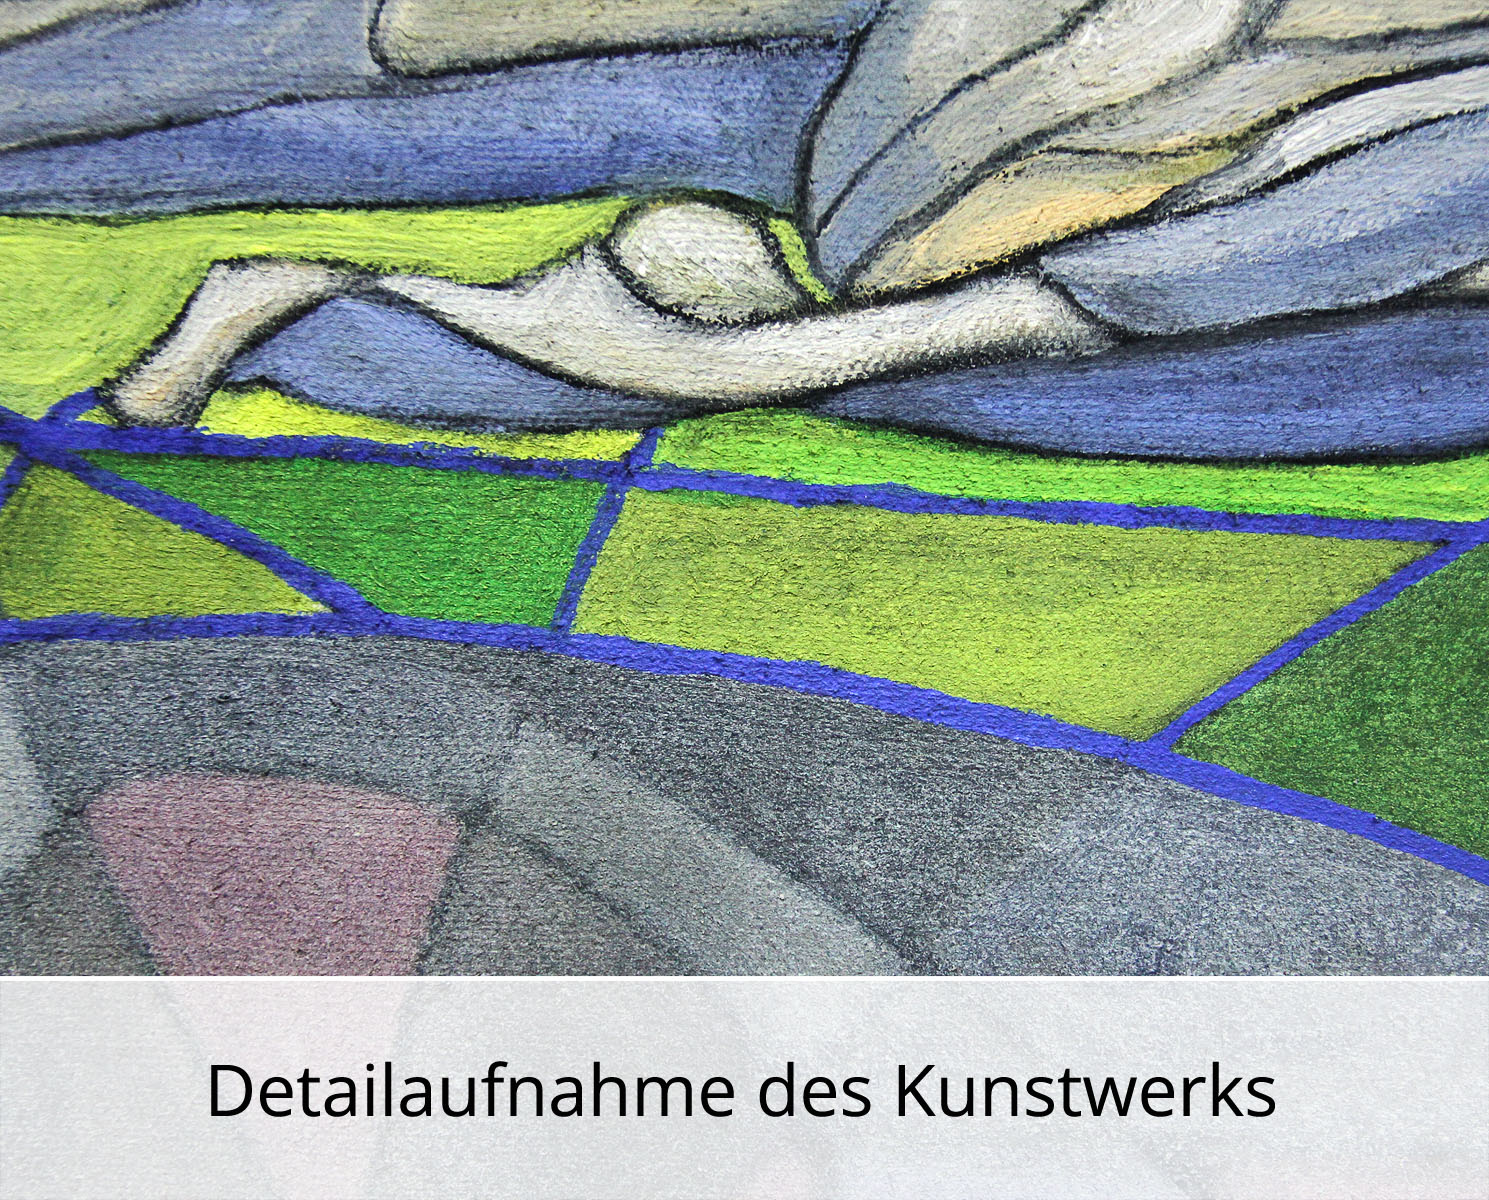 C. Blechschmidt: "Grünes Sofa", Original/Unikat, zeitgenössisches Ölgemälde